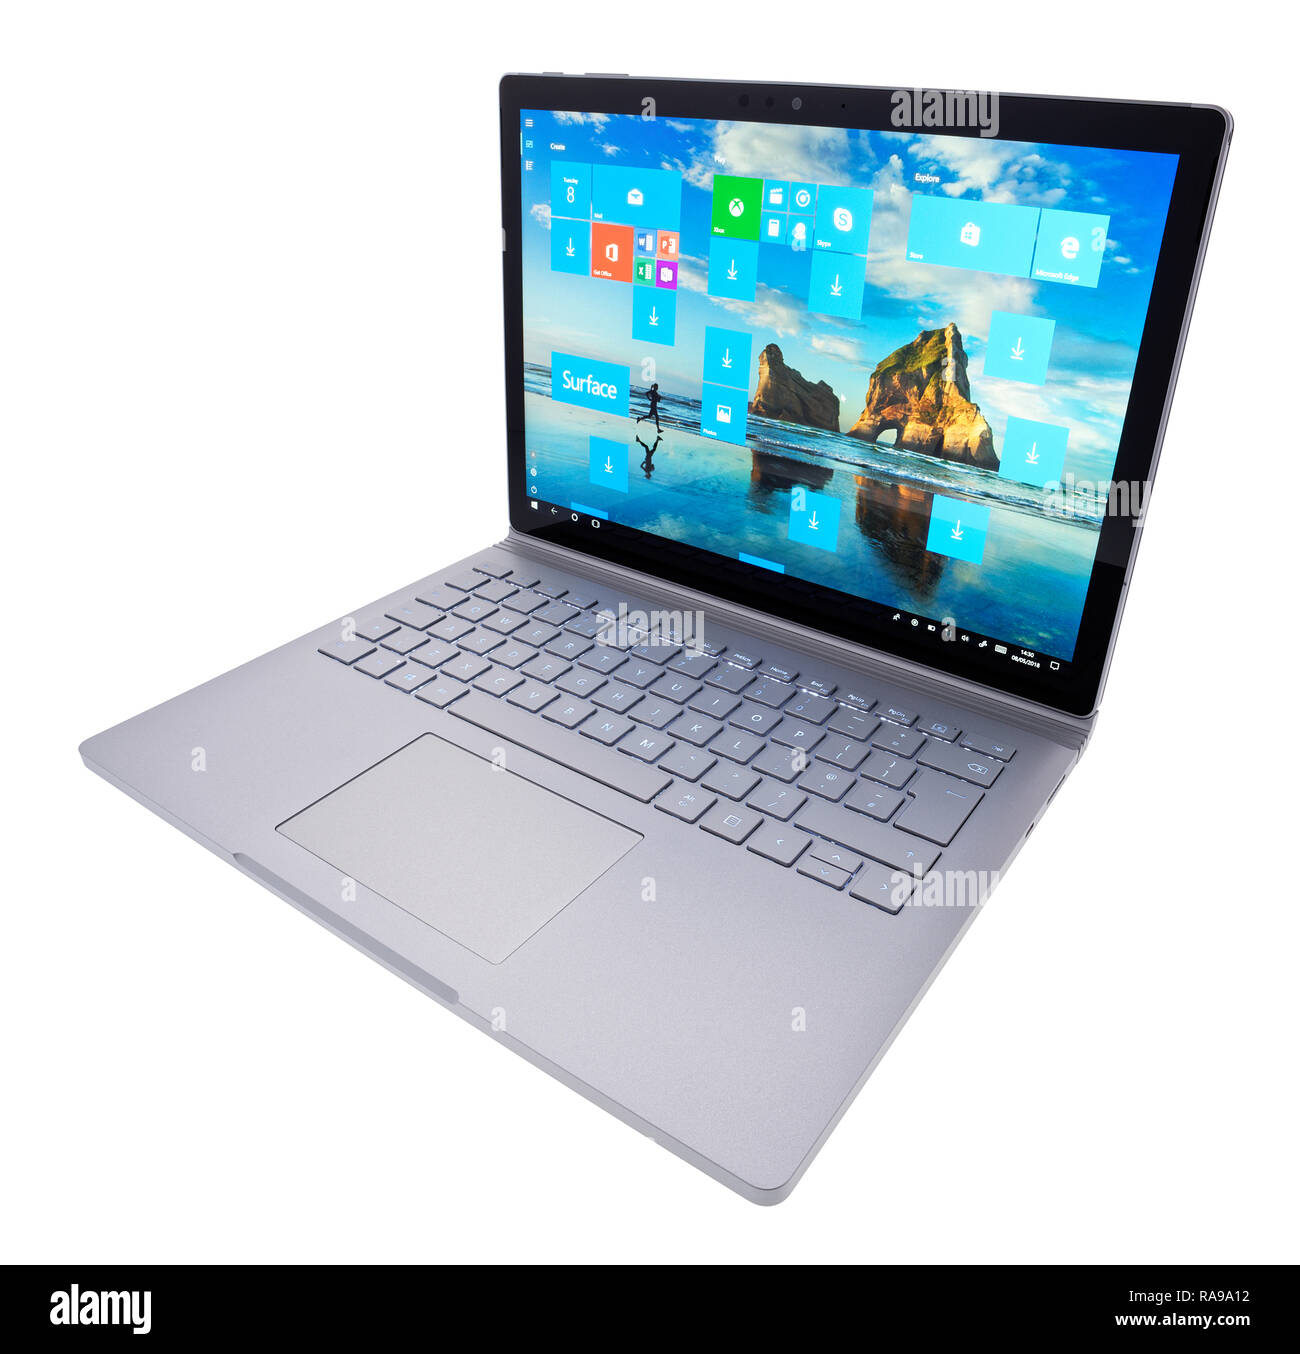 Microsoft Surface Prenota, versatile computer laptop. Foto Stock